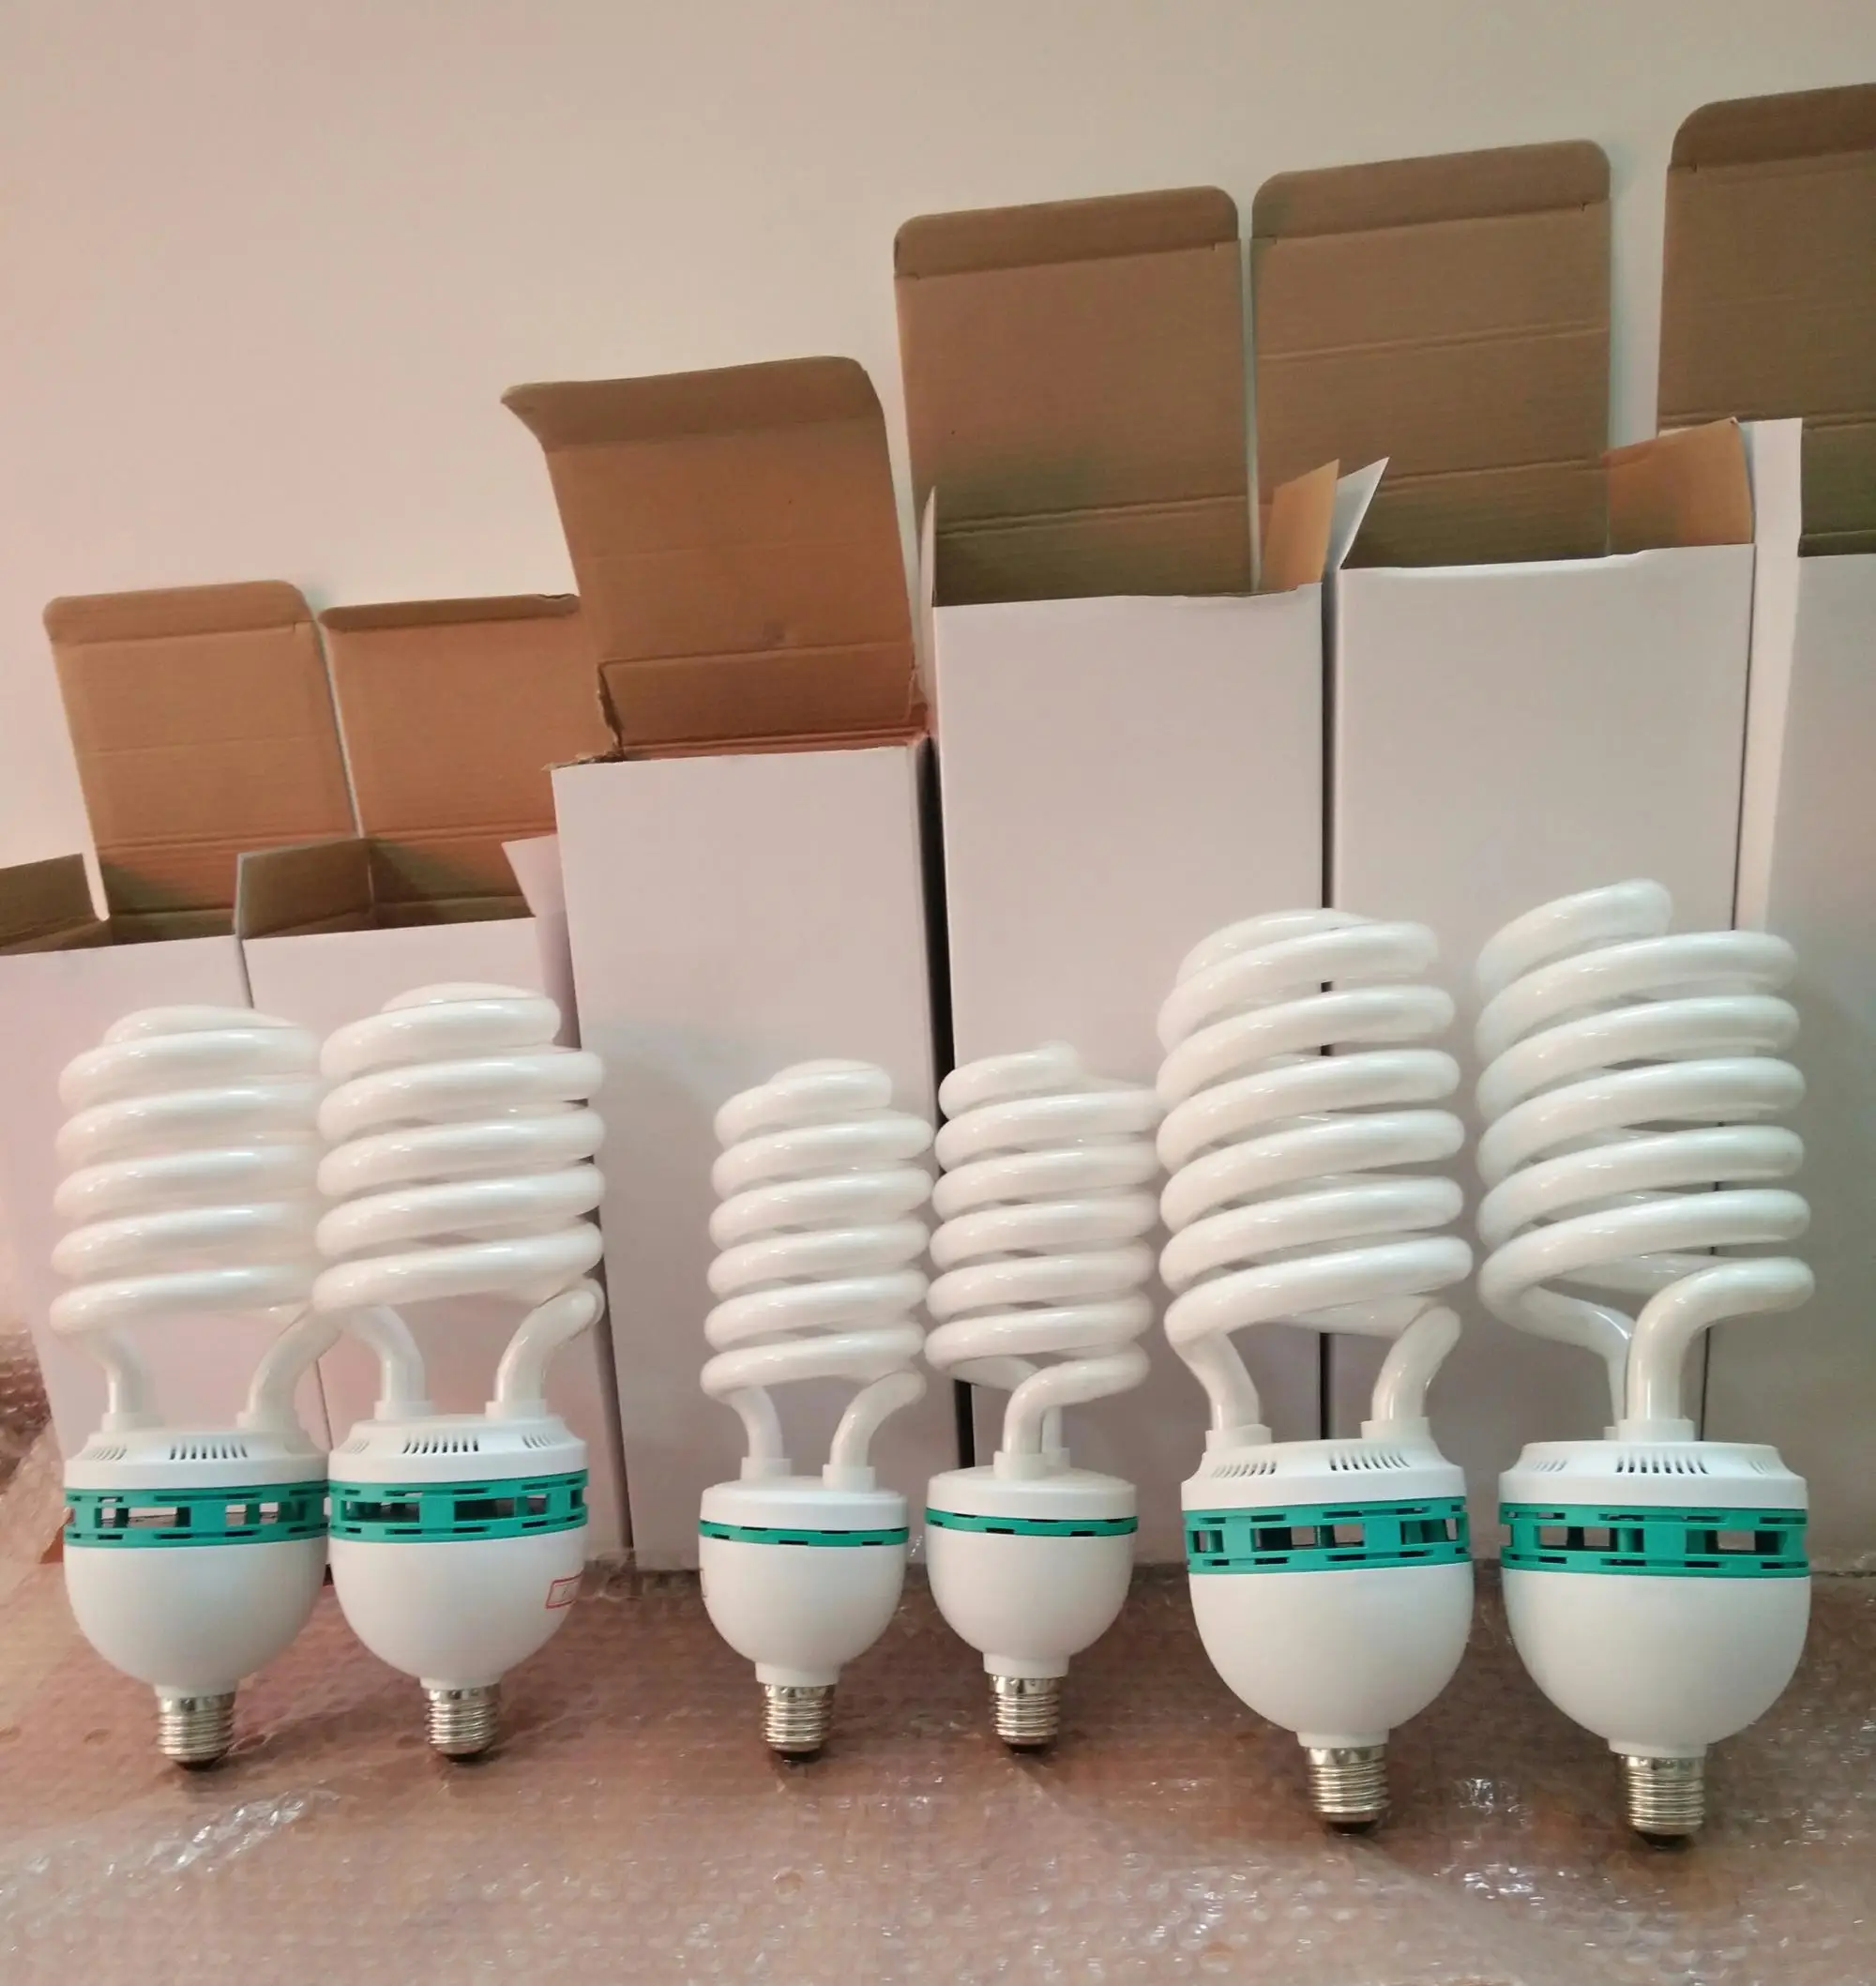 compact fluorescent lamp / energy saver bulb / energy saving